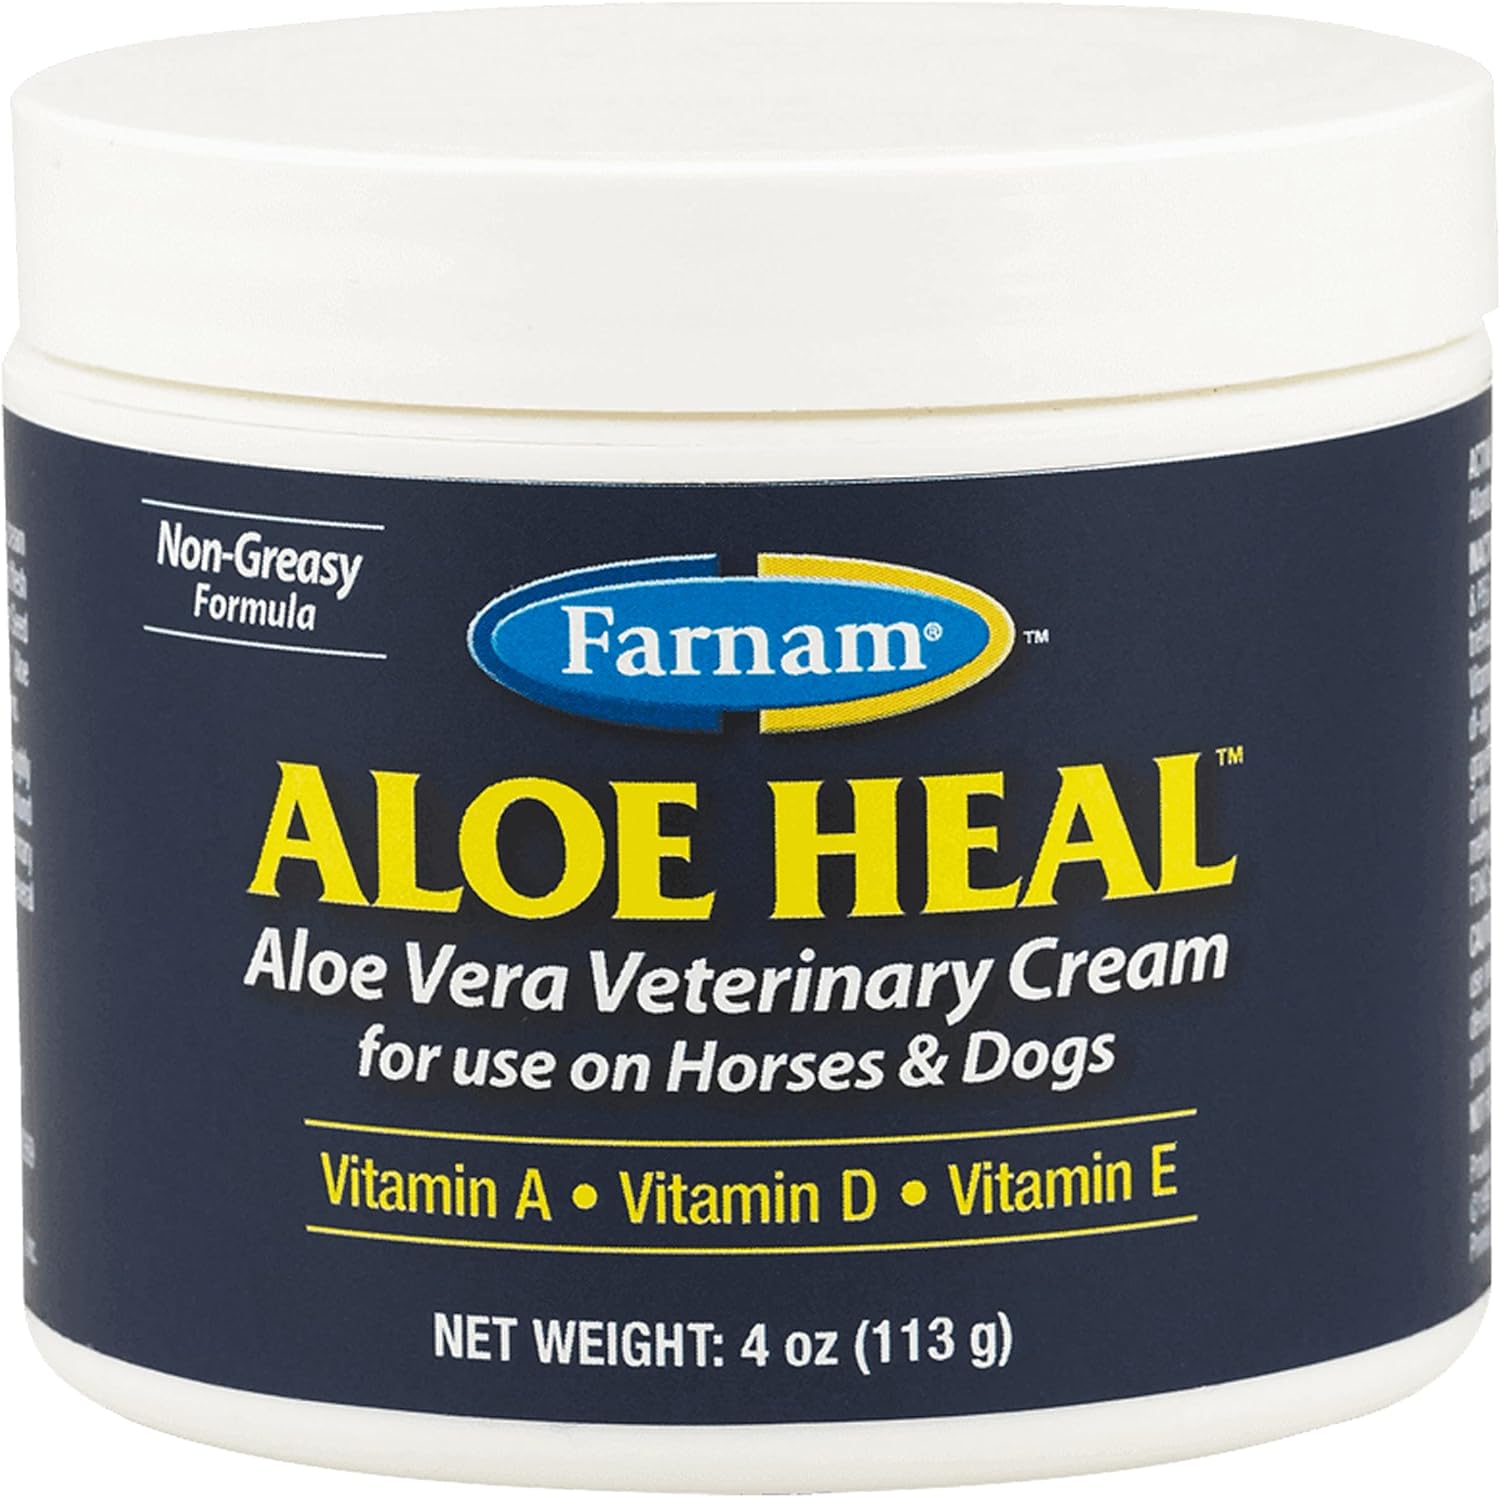 Farnam Aloe Heal Aloe Vera Veterinary Cream for use on Horses and Dogs 4 Ounces